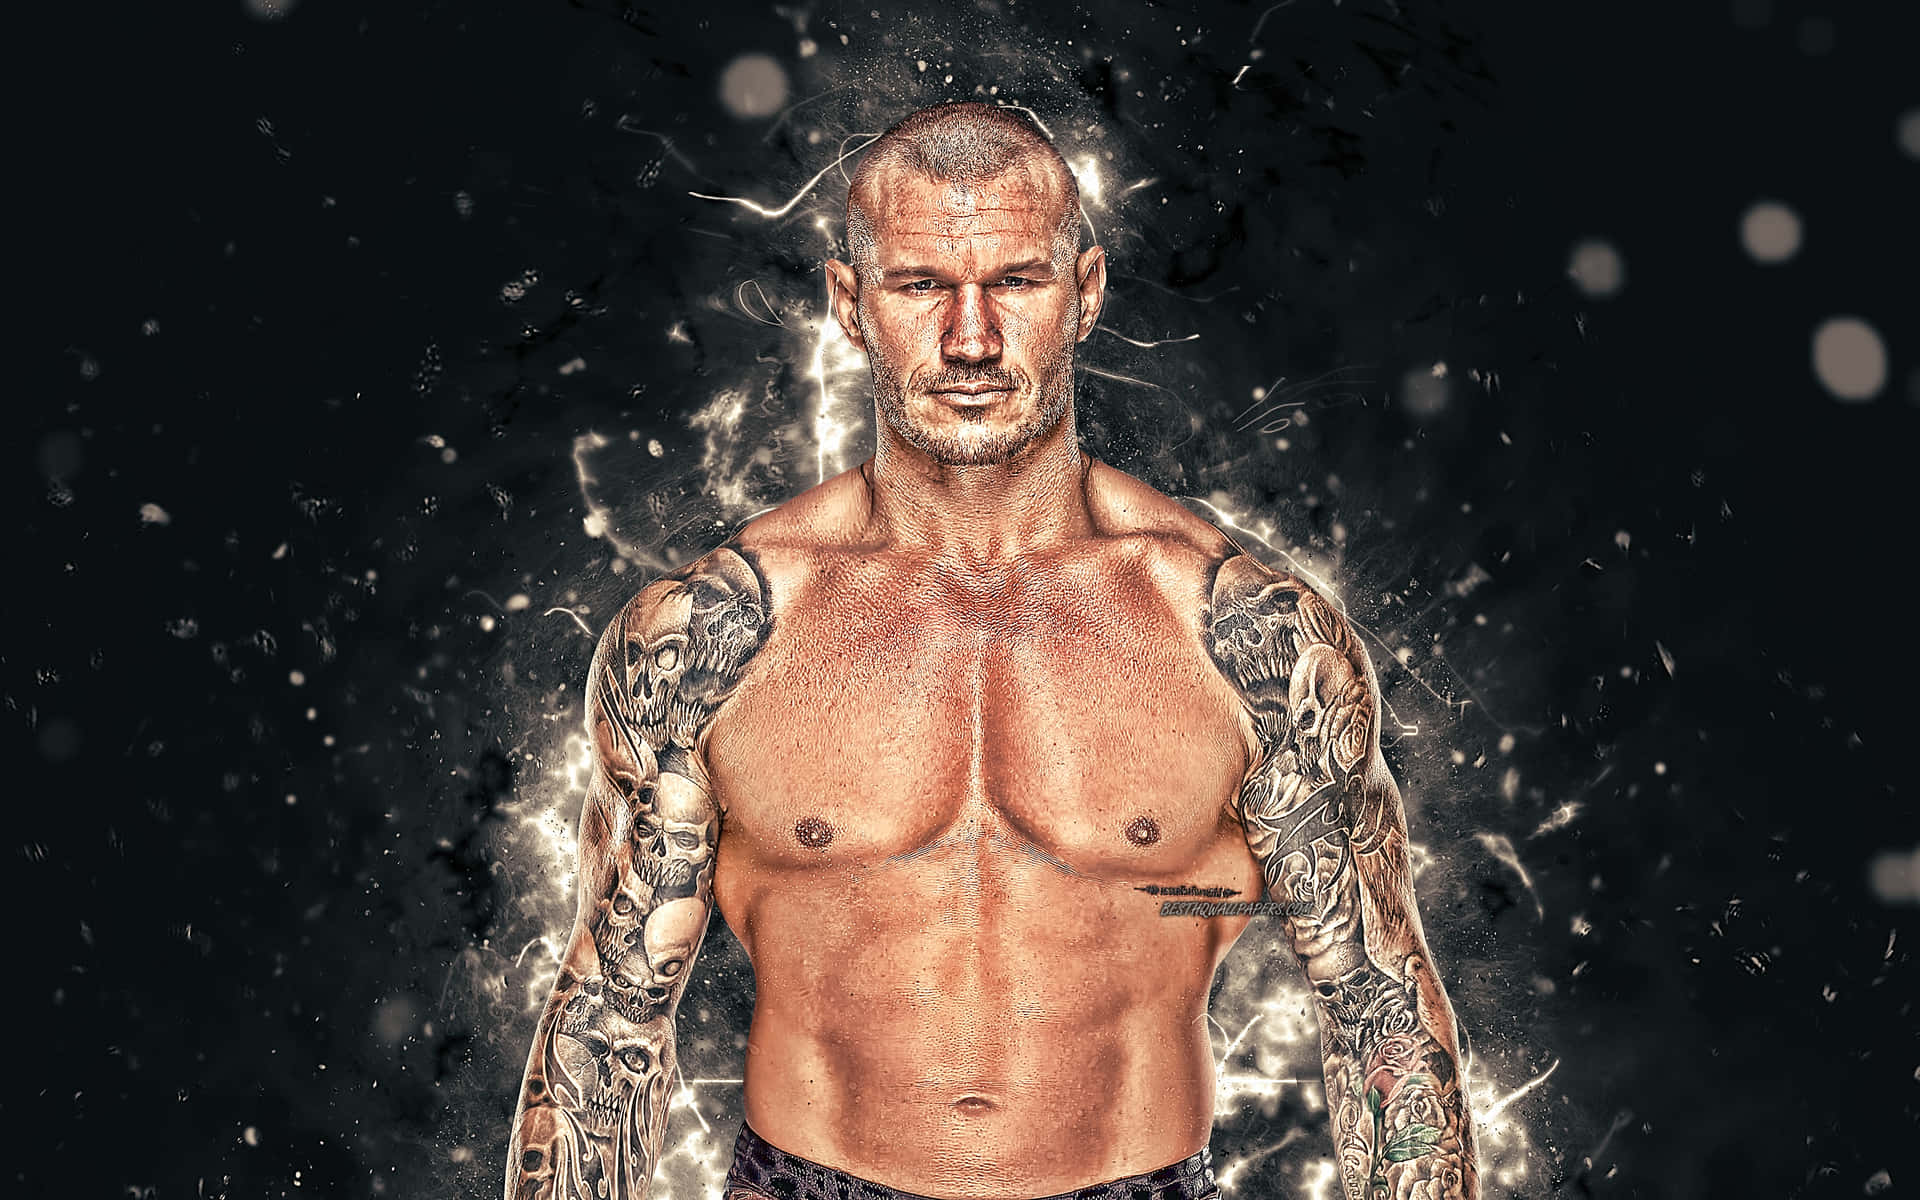 Wwe Superstar Randy Orton Showing Off His Championship Belt.